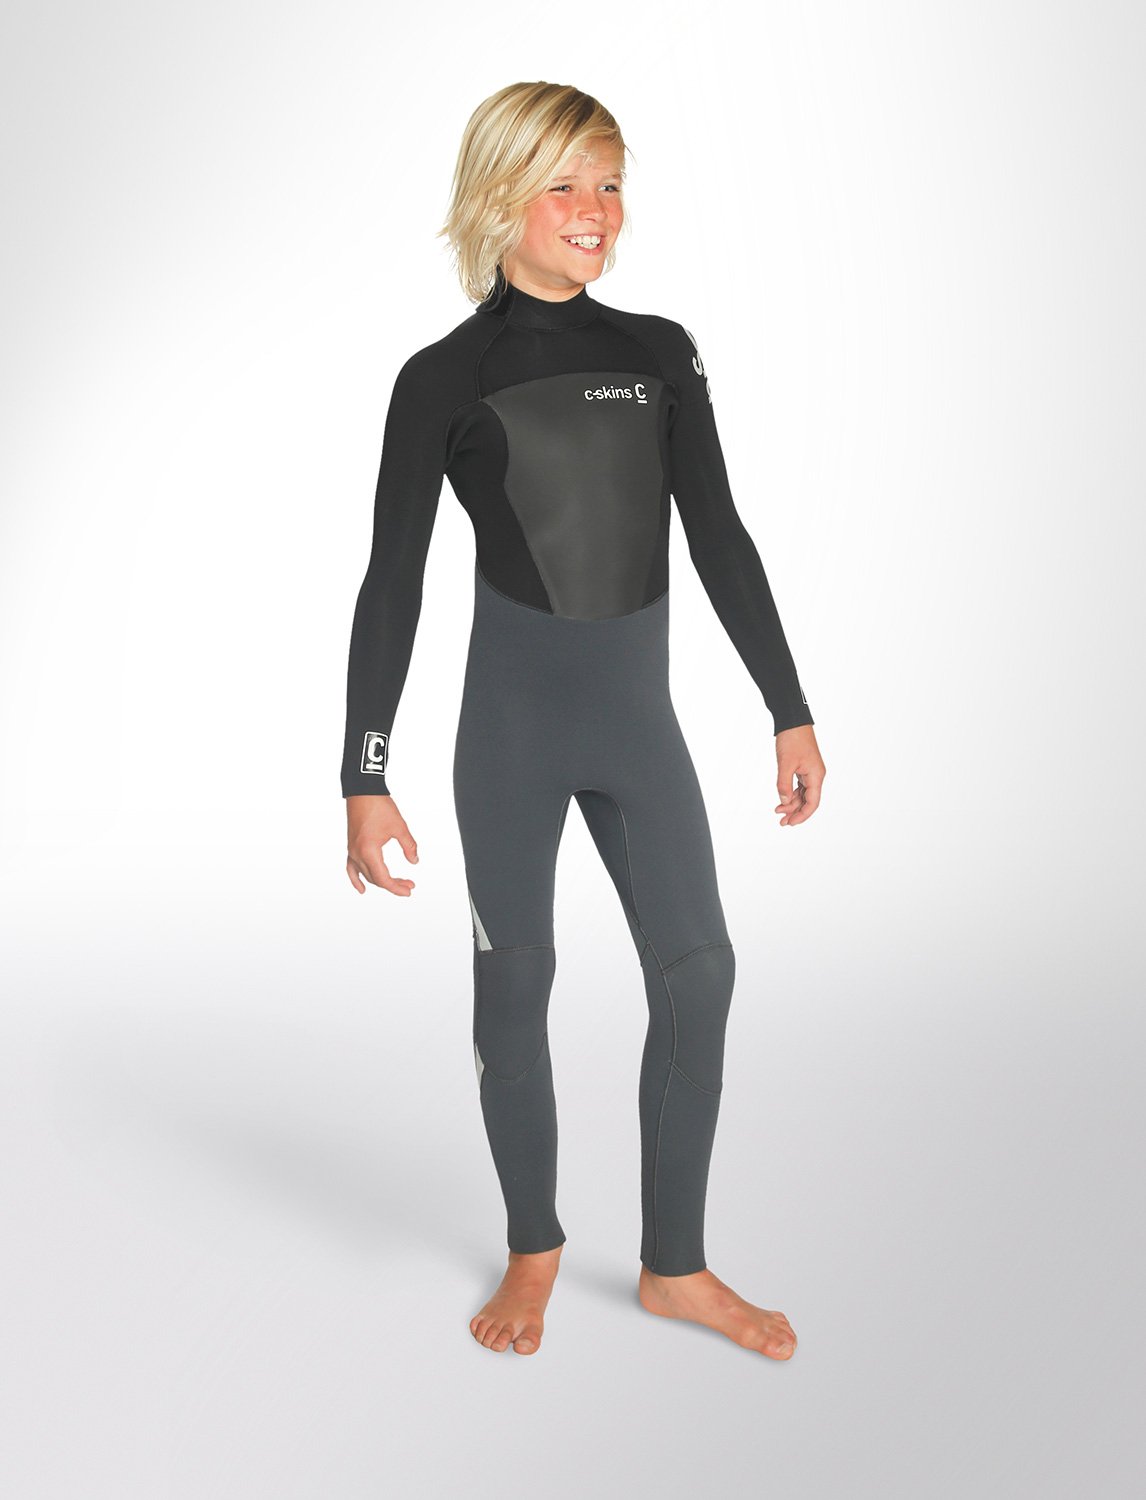 c-skins-legend-5-4-3-junior-winter-wetsuit-back-zip-gbs-unisex-galway-ireland-blacksheepsurfco-graphite-silver-front